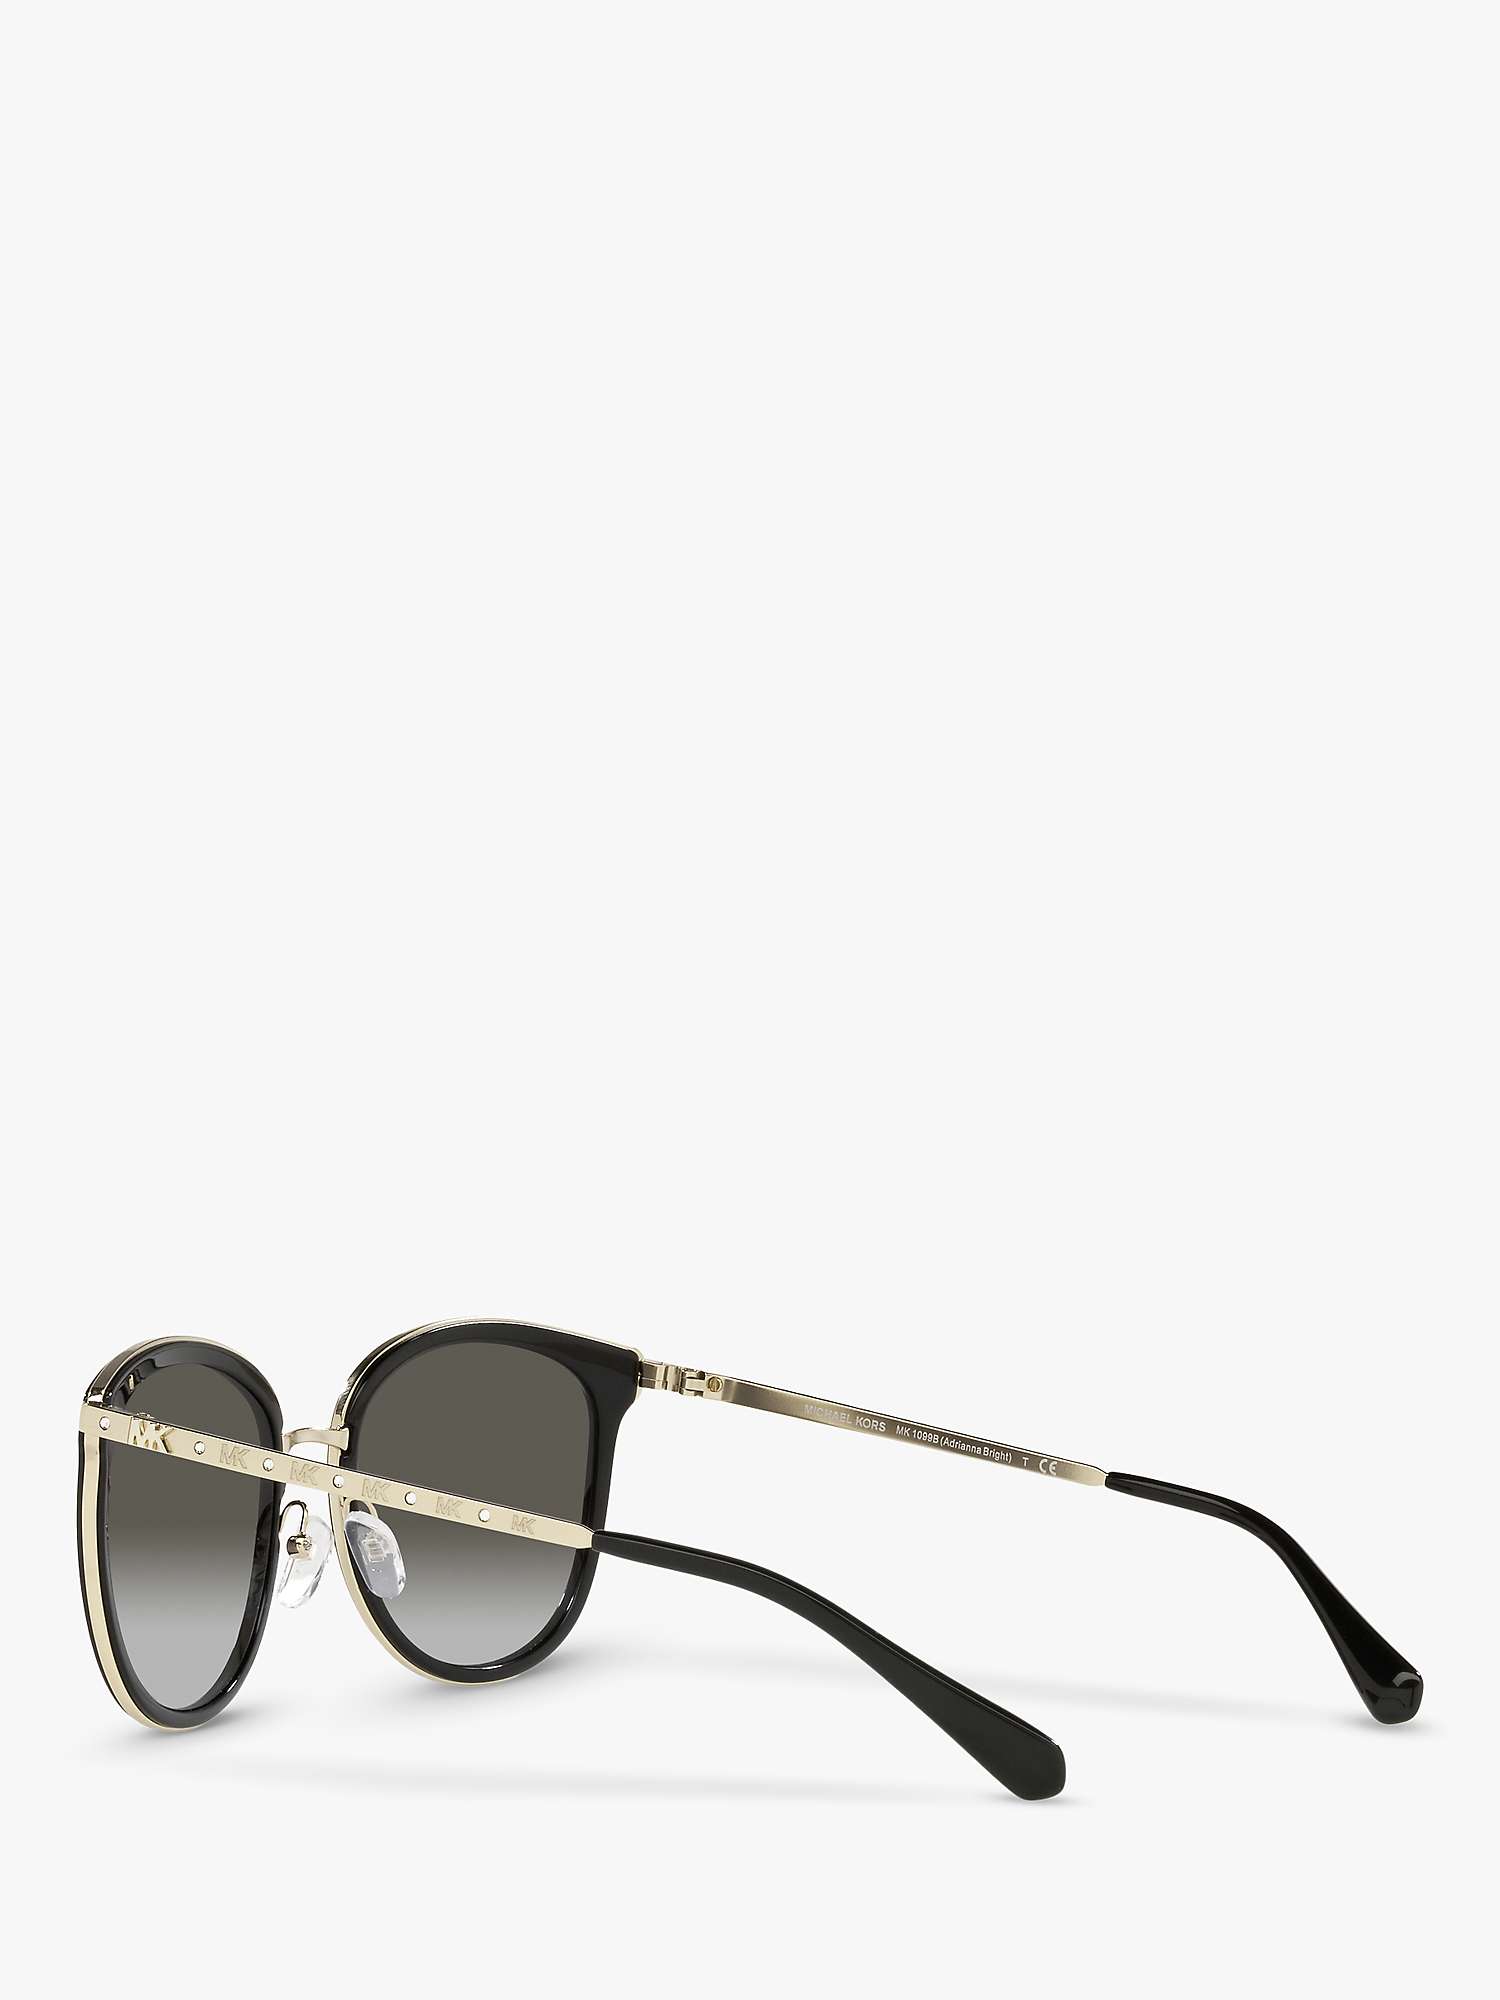 Buy Michael Kors MK1099B Women's Adrna Round Sunglasses Online at johnlewis.com